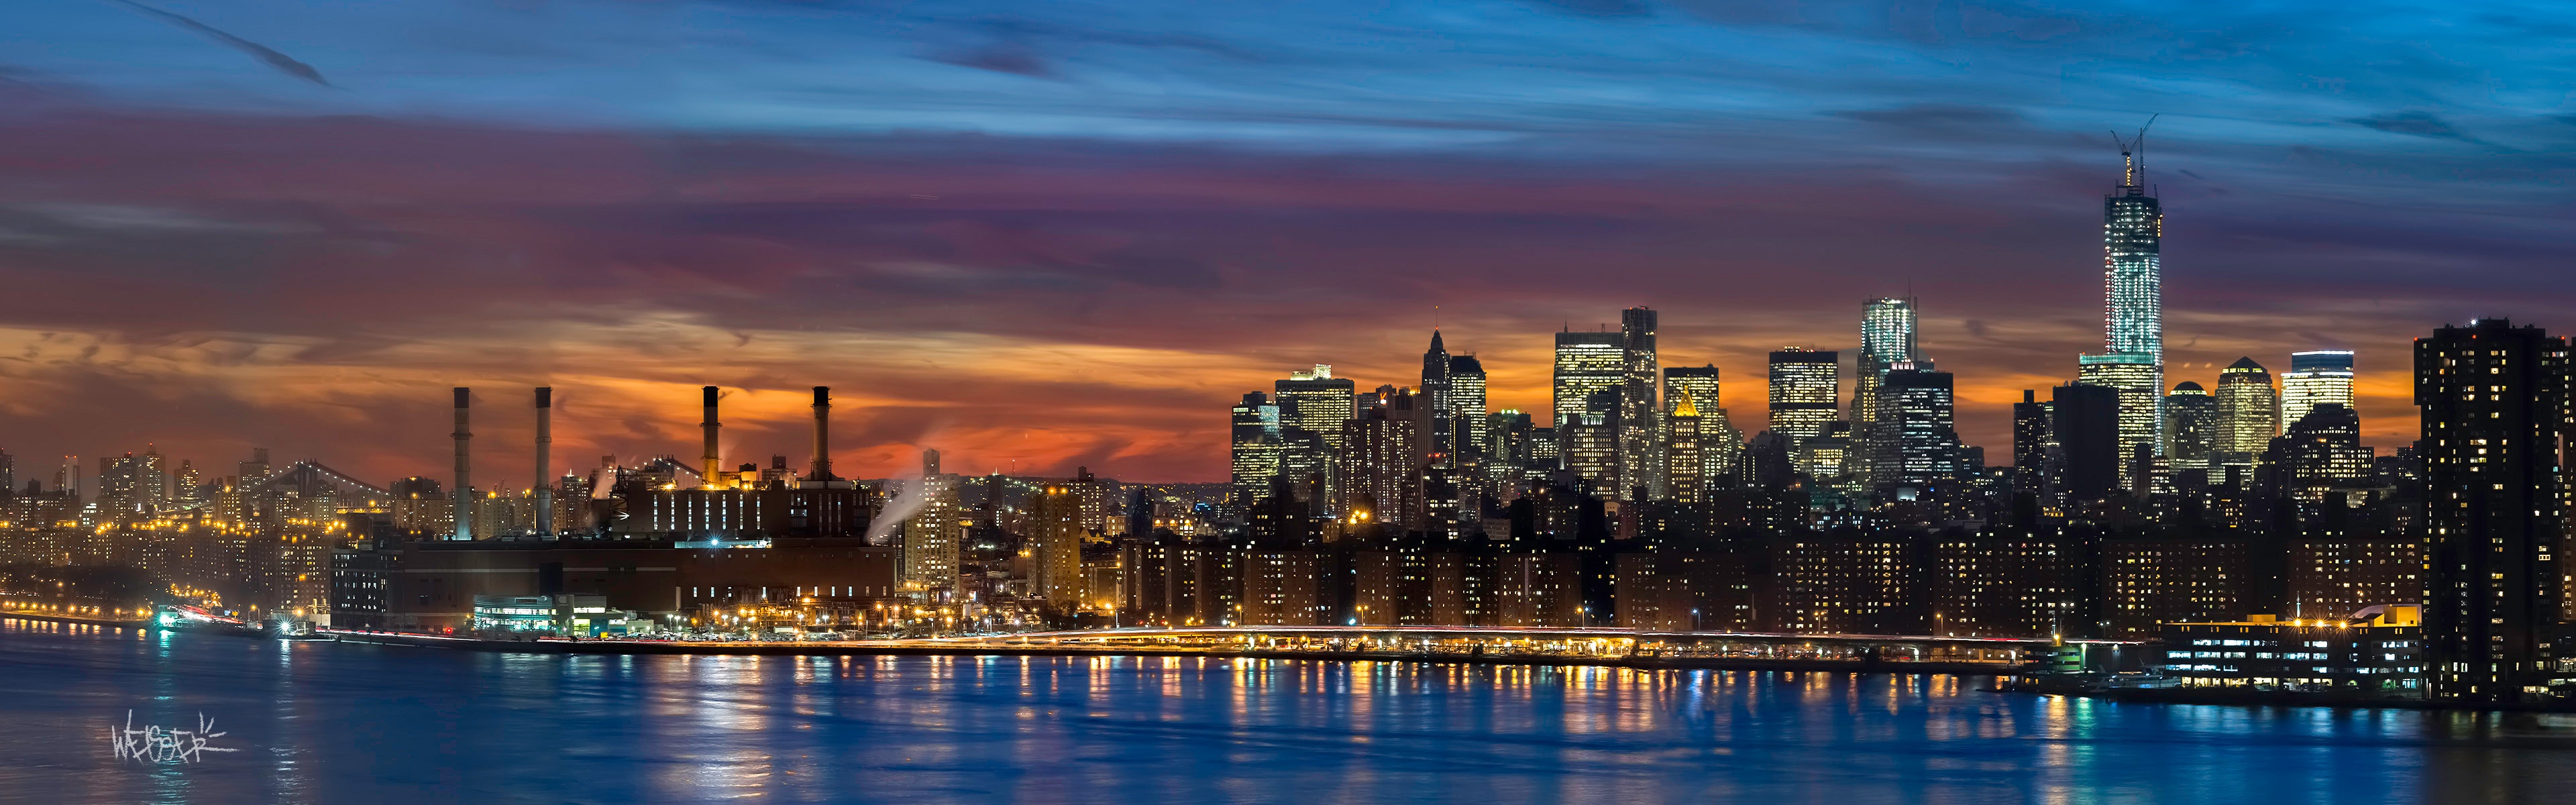 Manhattan Skyline New York Panorama Highest Resolution Panorama